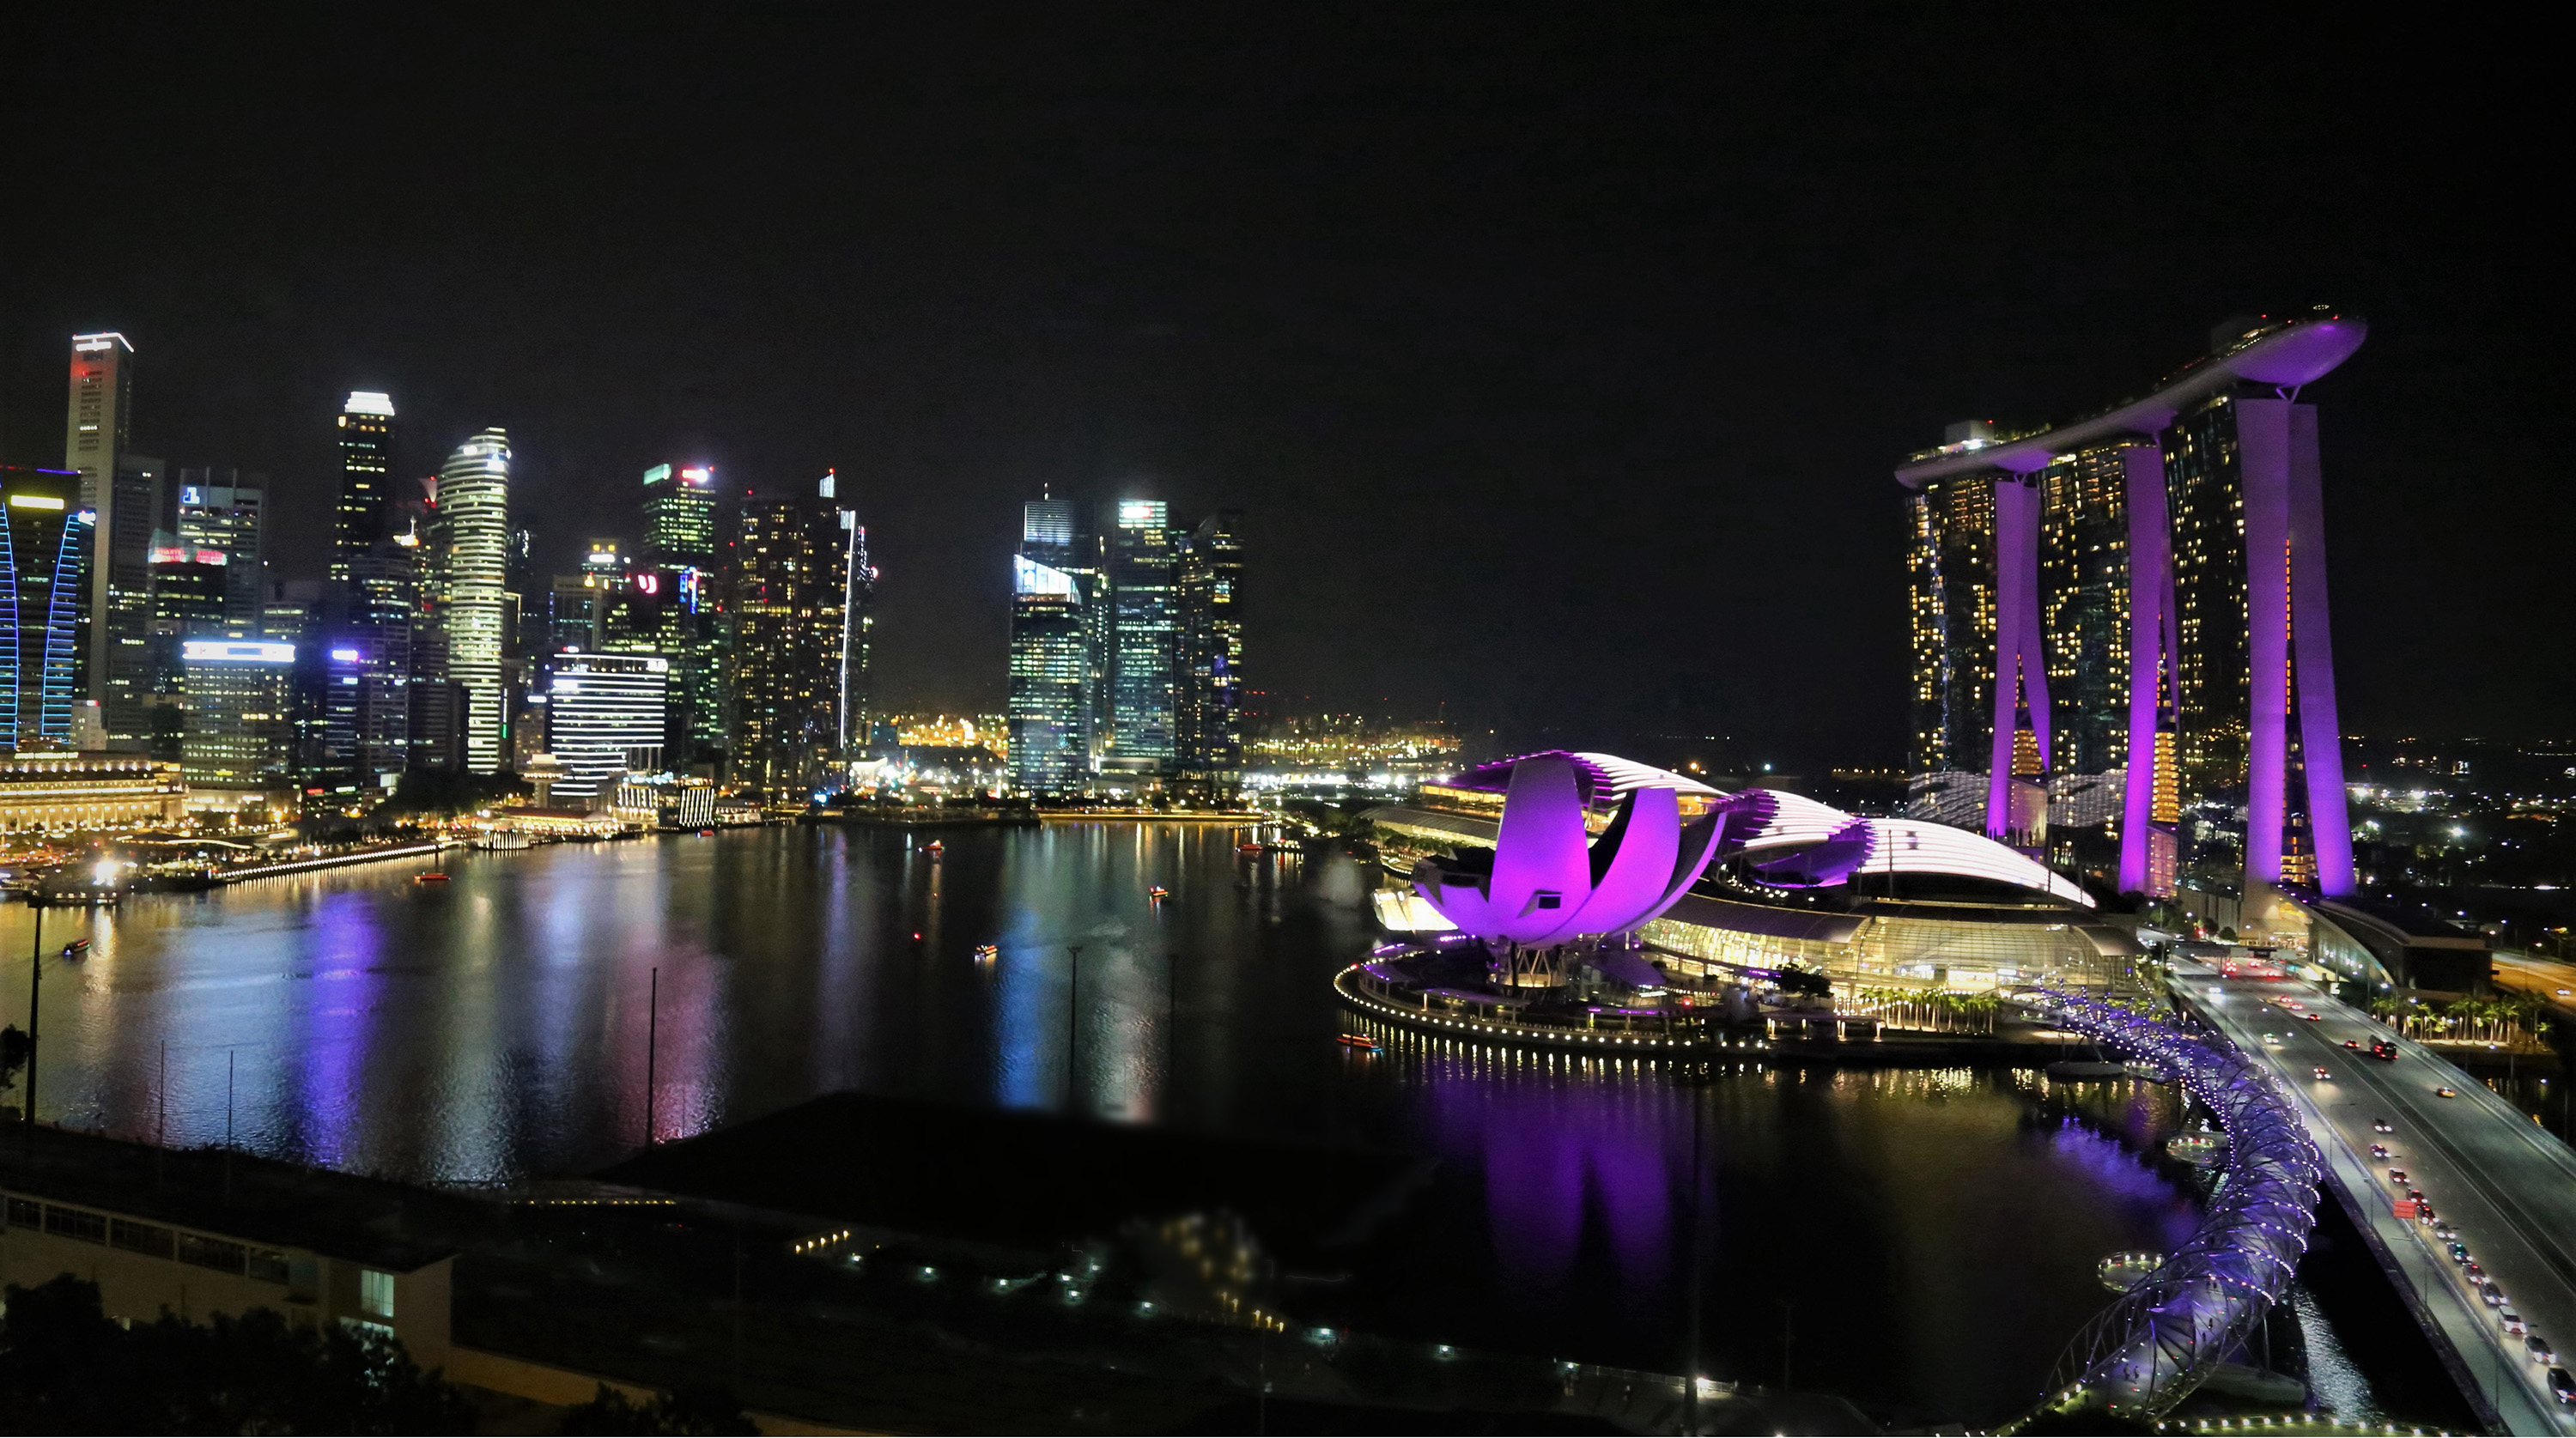 Singapore at night 3.jpg